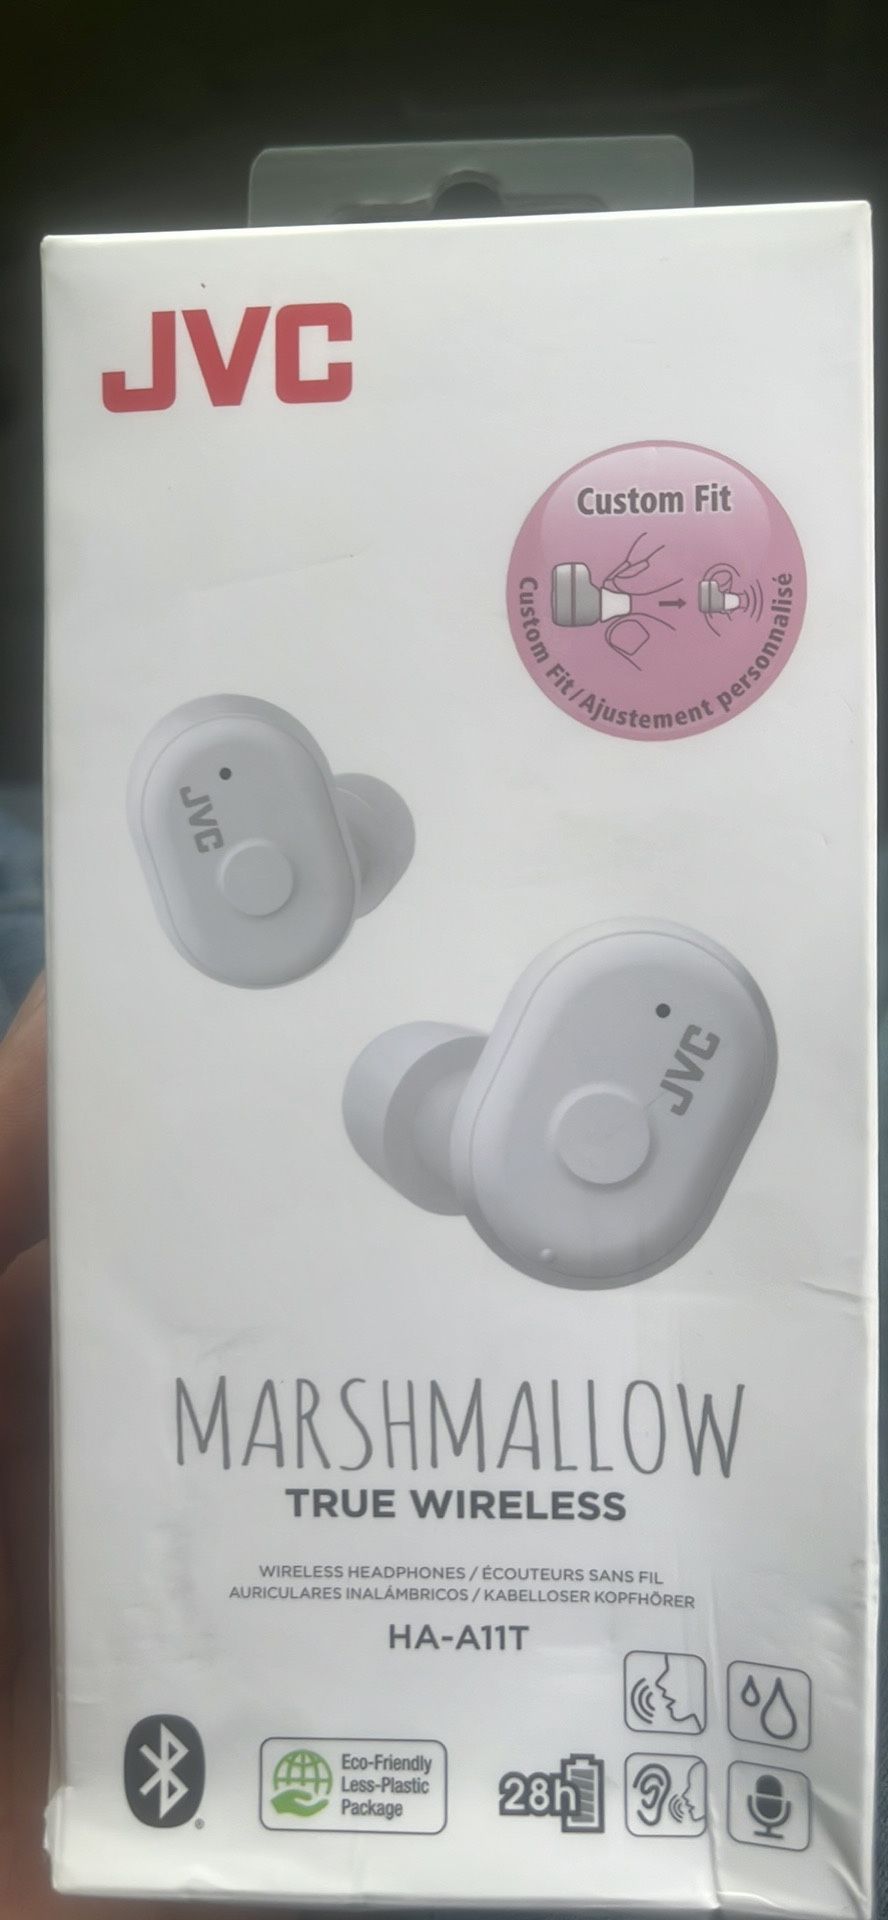 Jvc Marshmallow Headphones